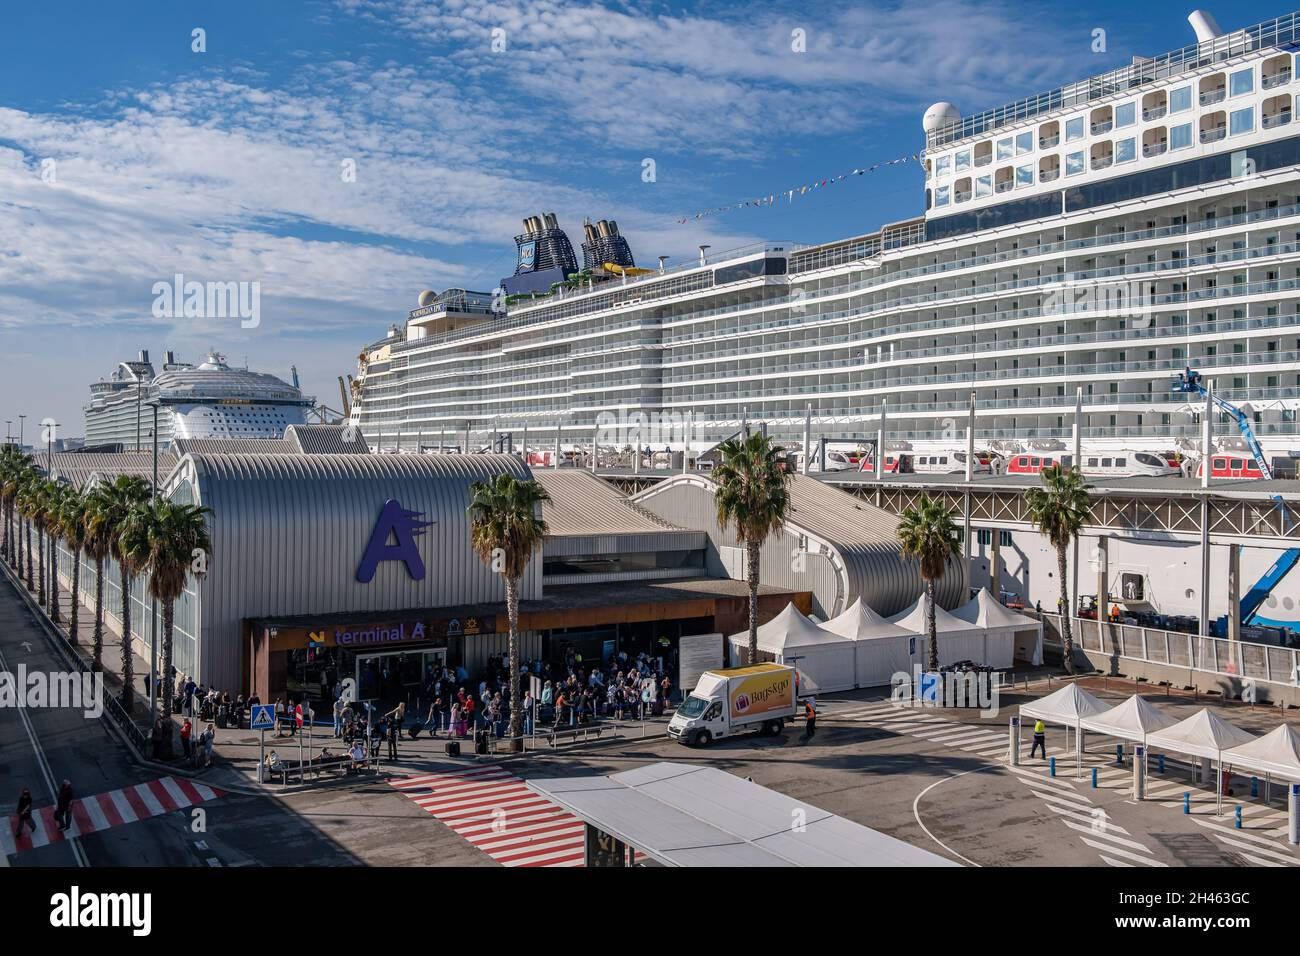 Mediterranean Cruises - Hotels near Cruise Ports